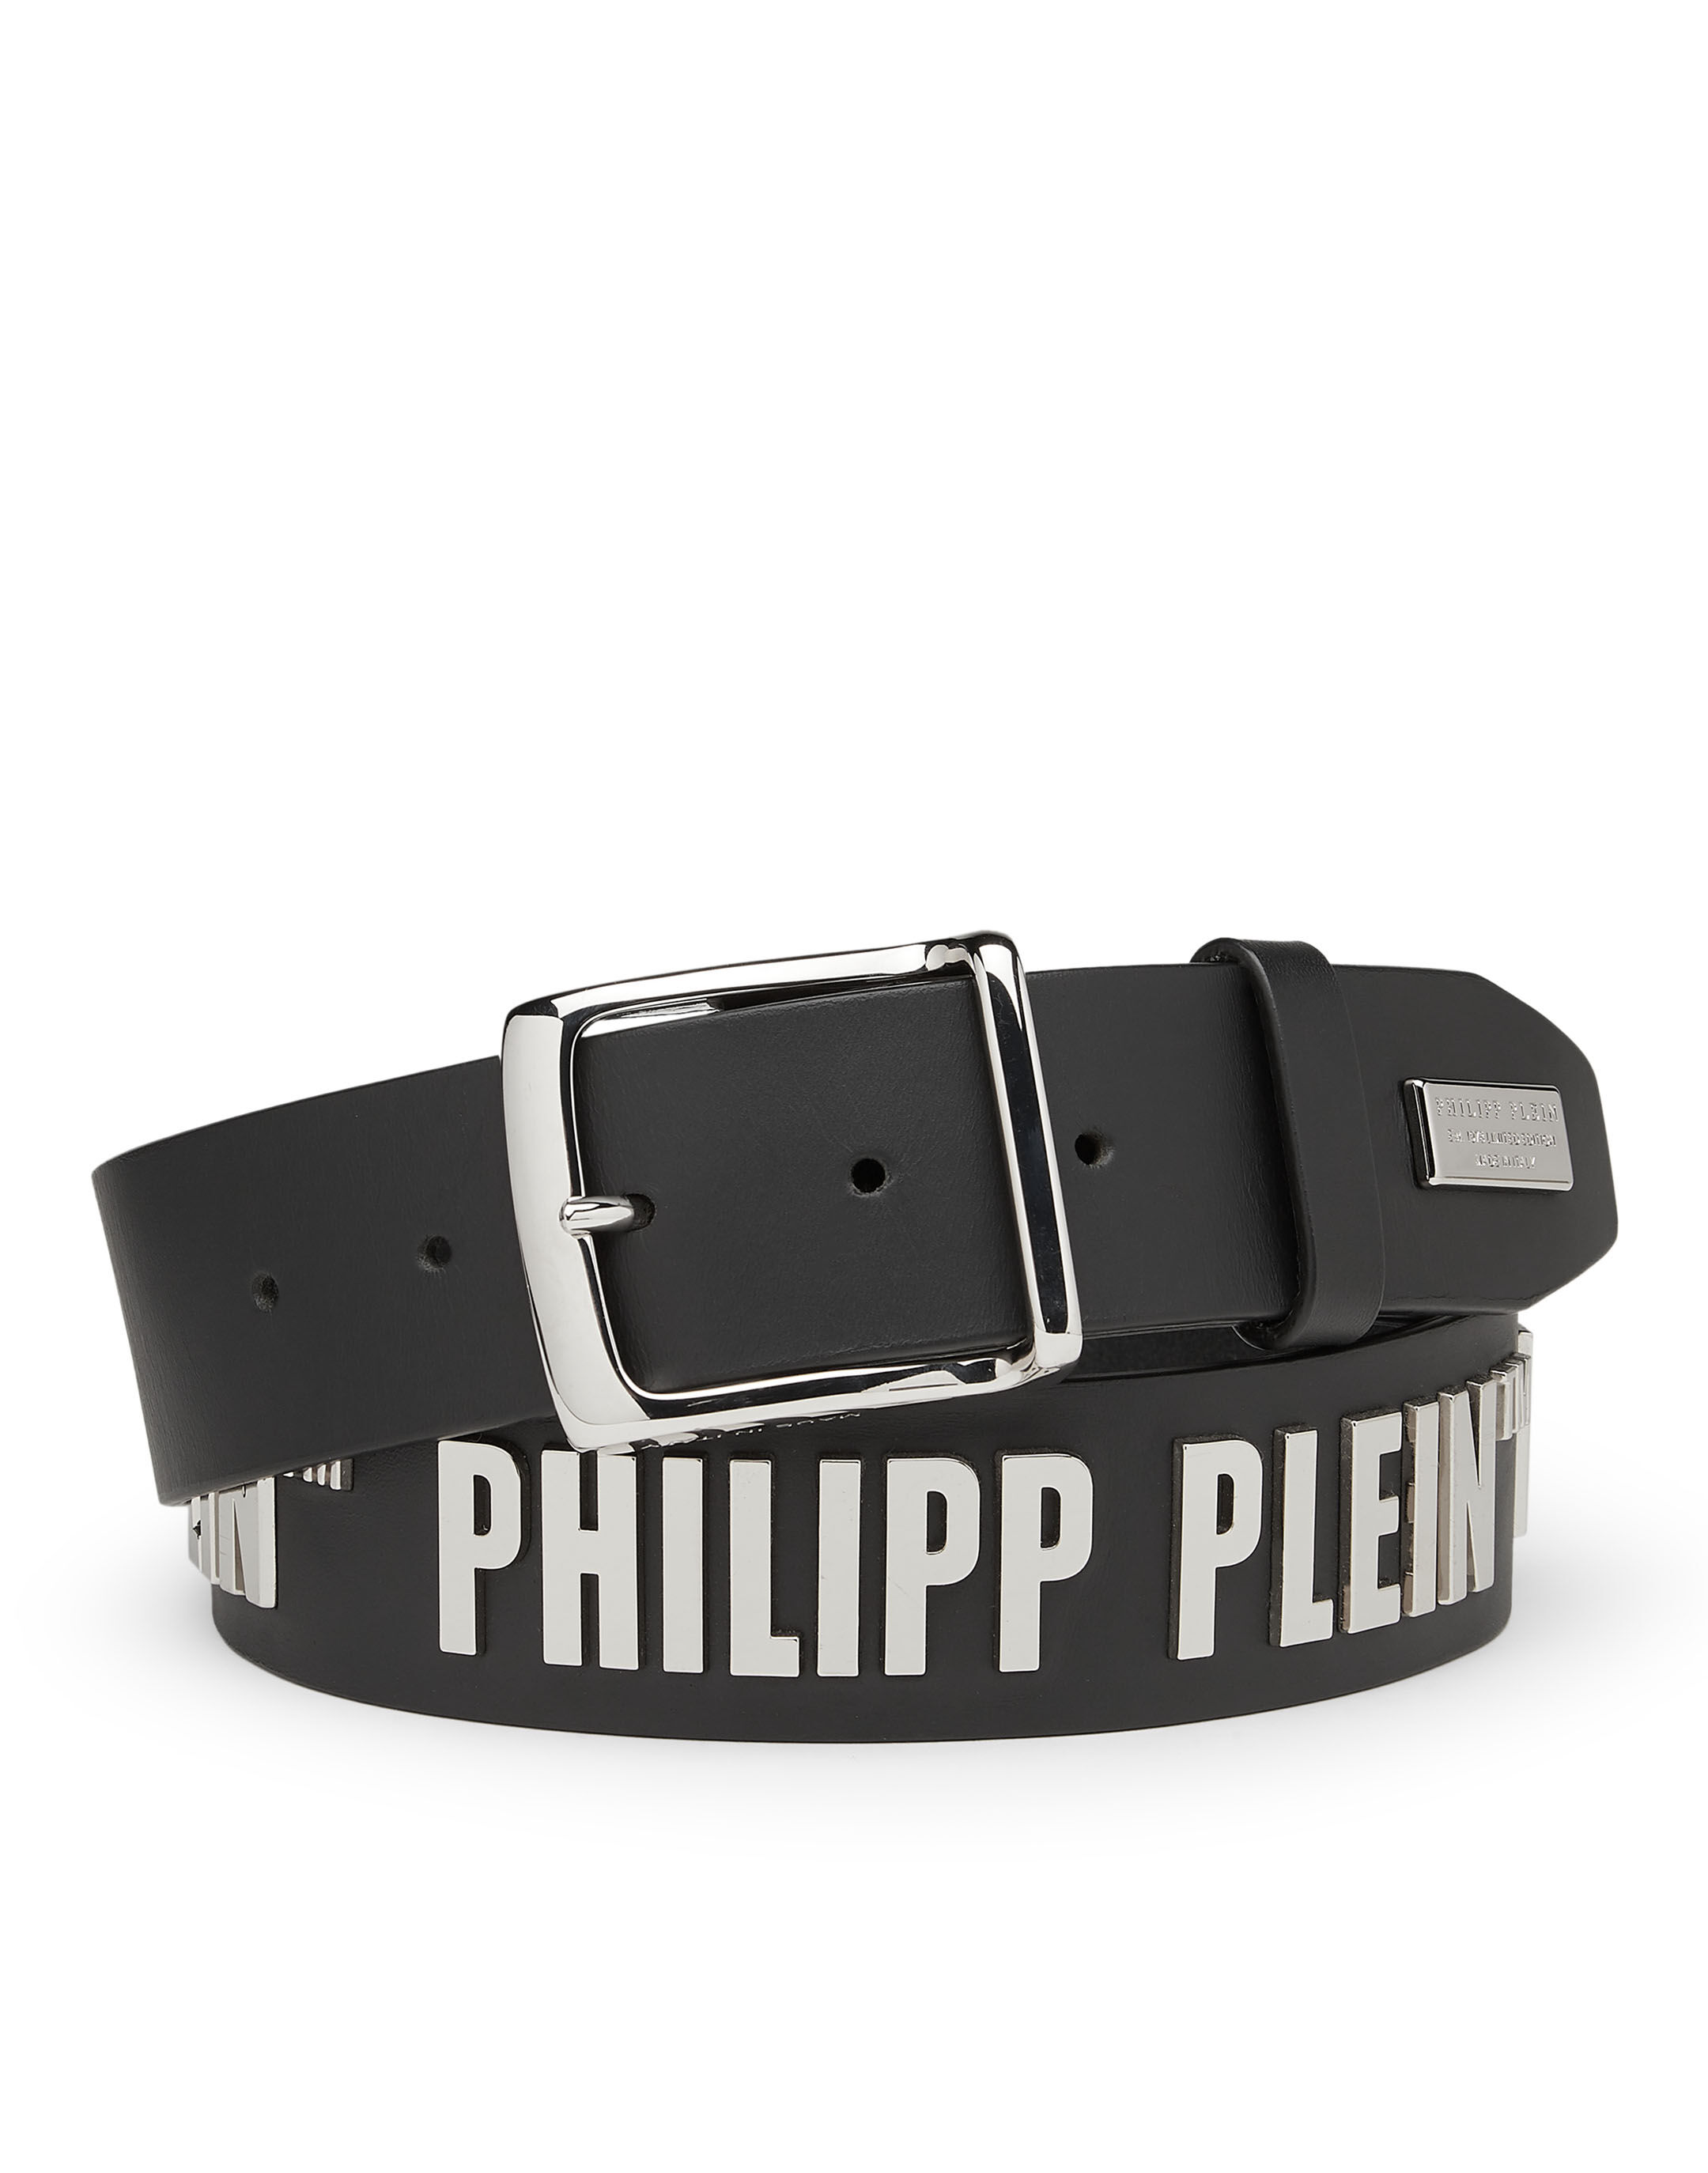 philipp plein belt sale